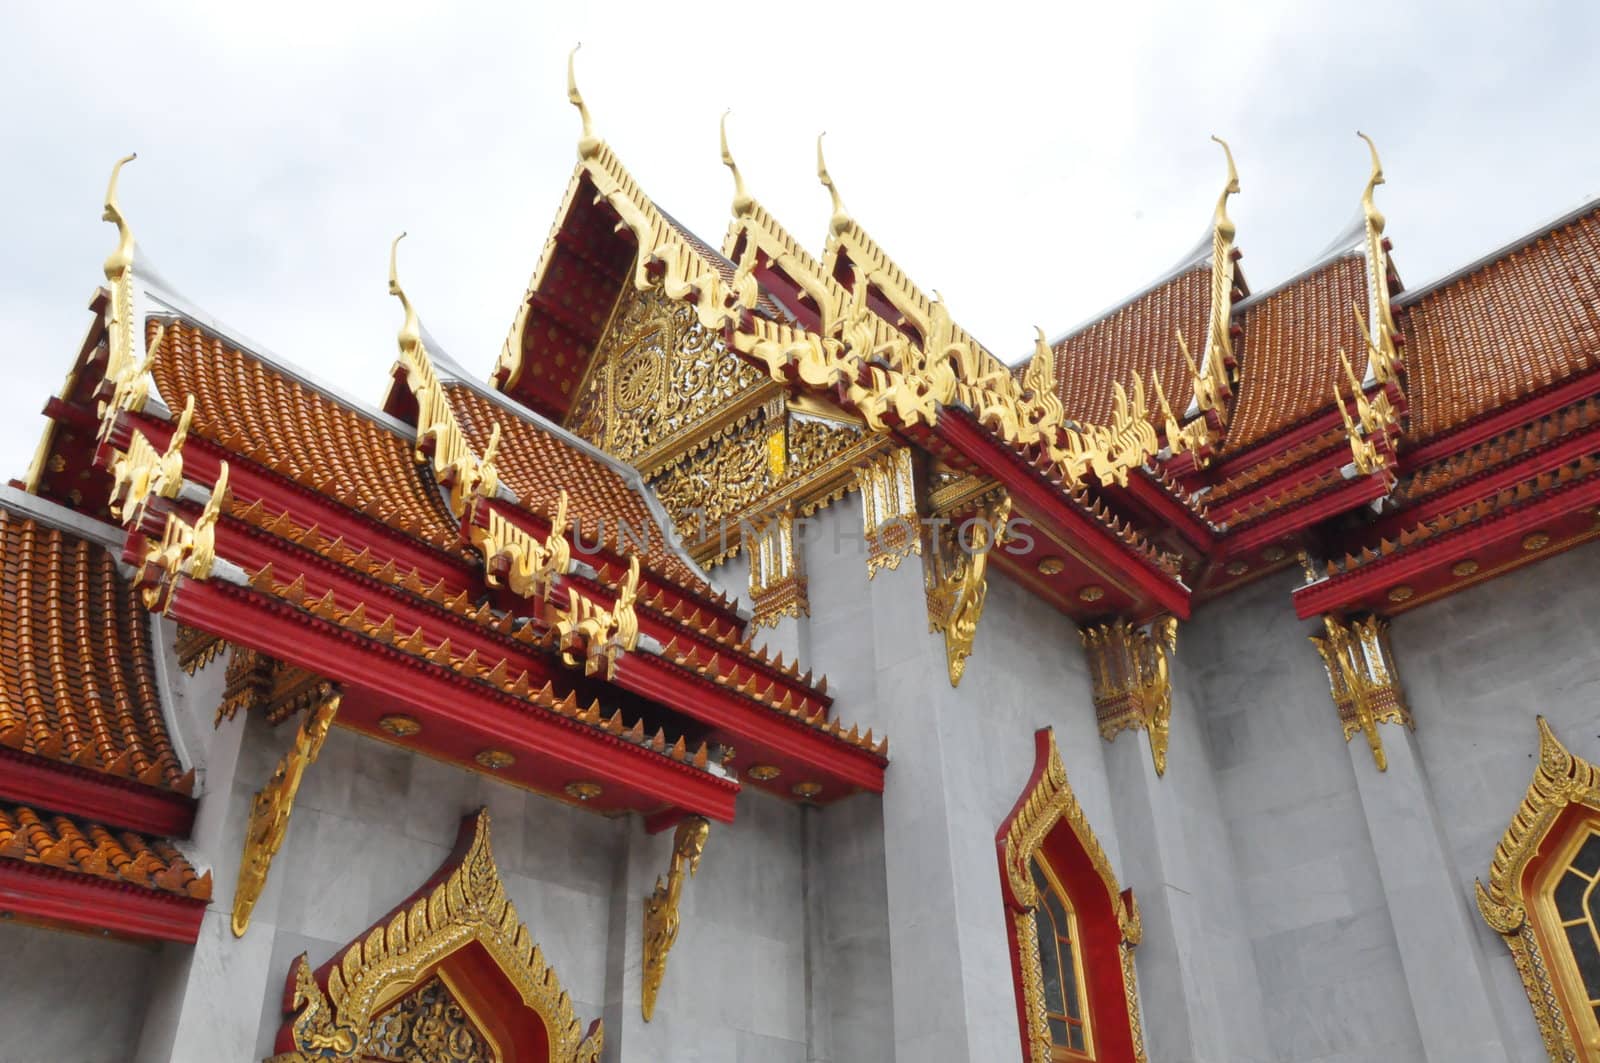 Wat Benchamabophit in Bangkok, Thailand by sainaniritu